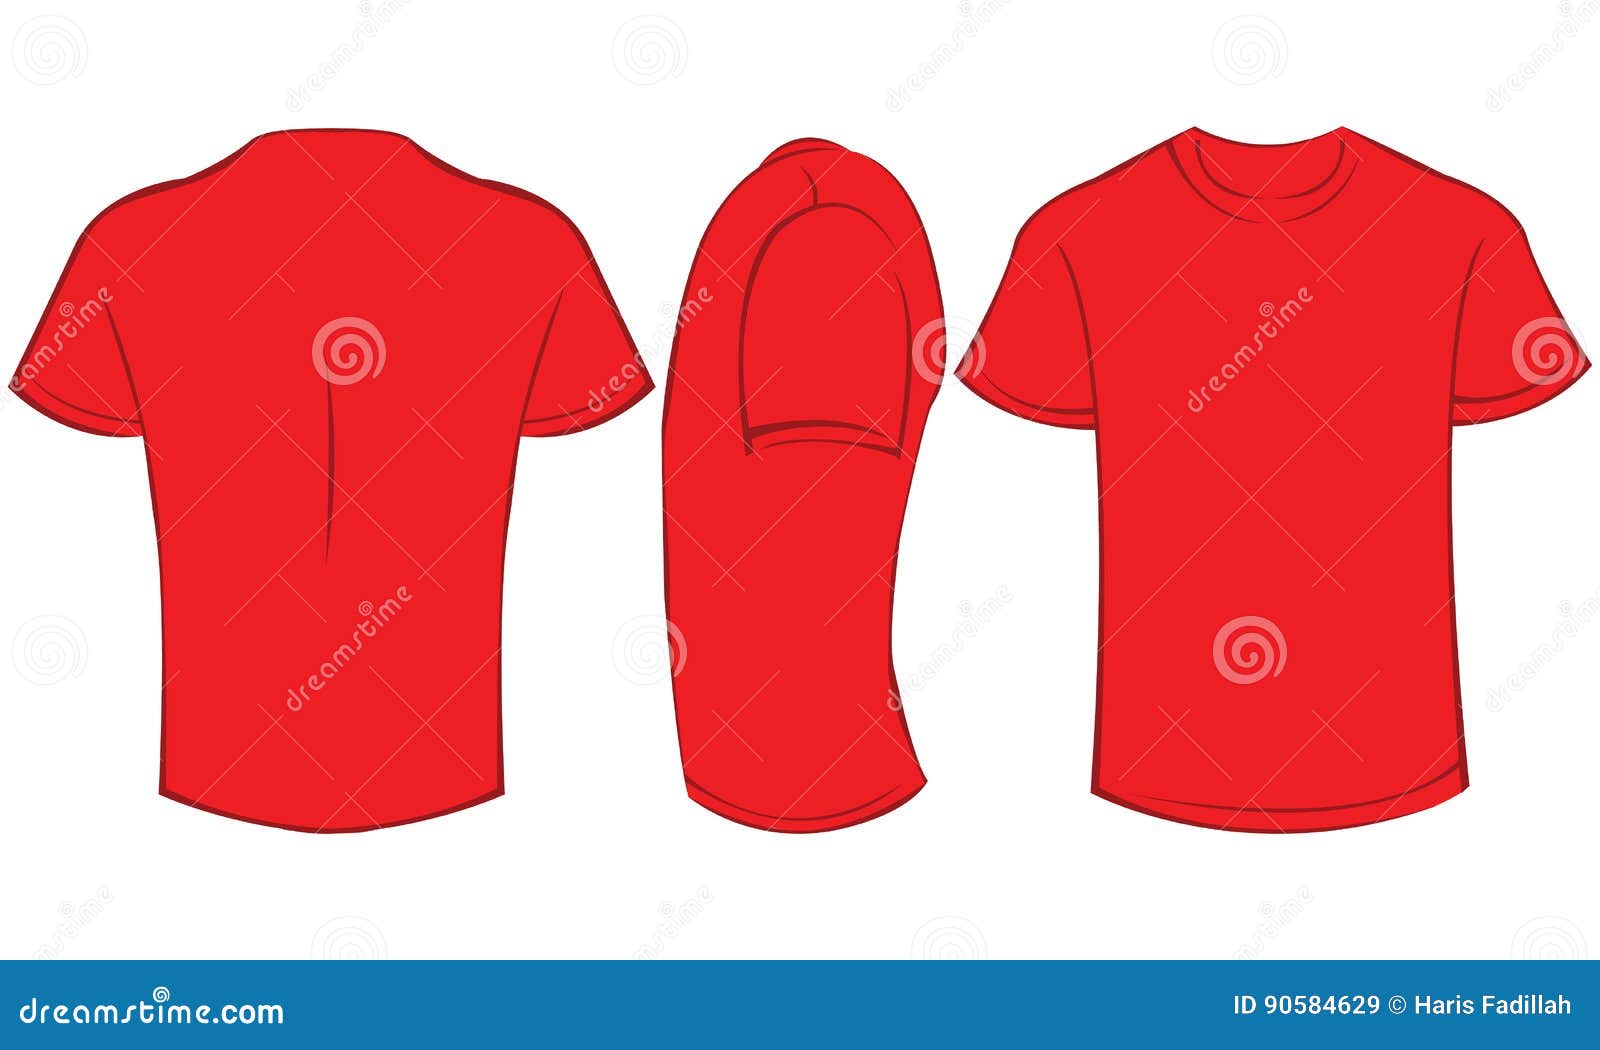 T shirt stock vector. Illustration of posing, active - 90584629